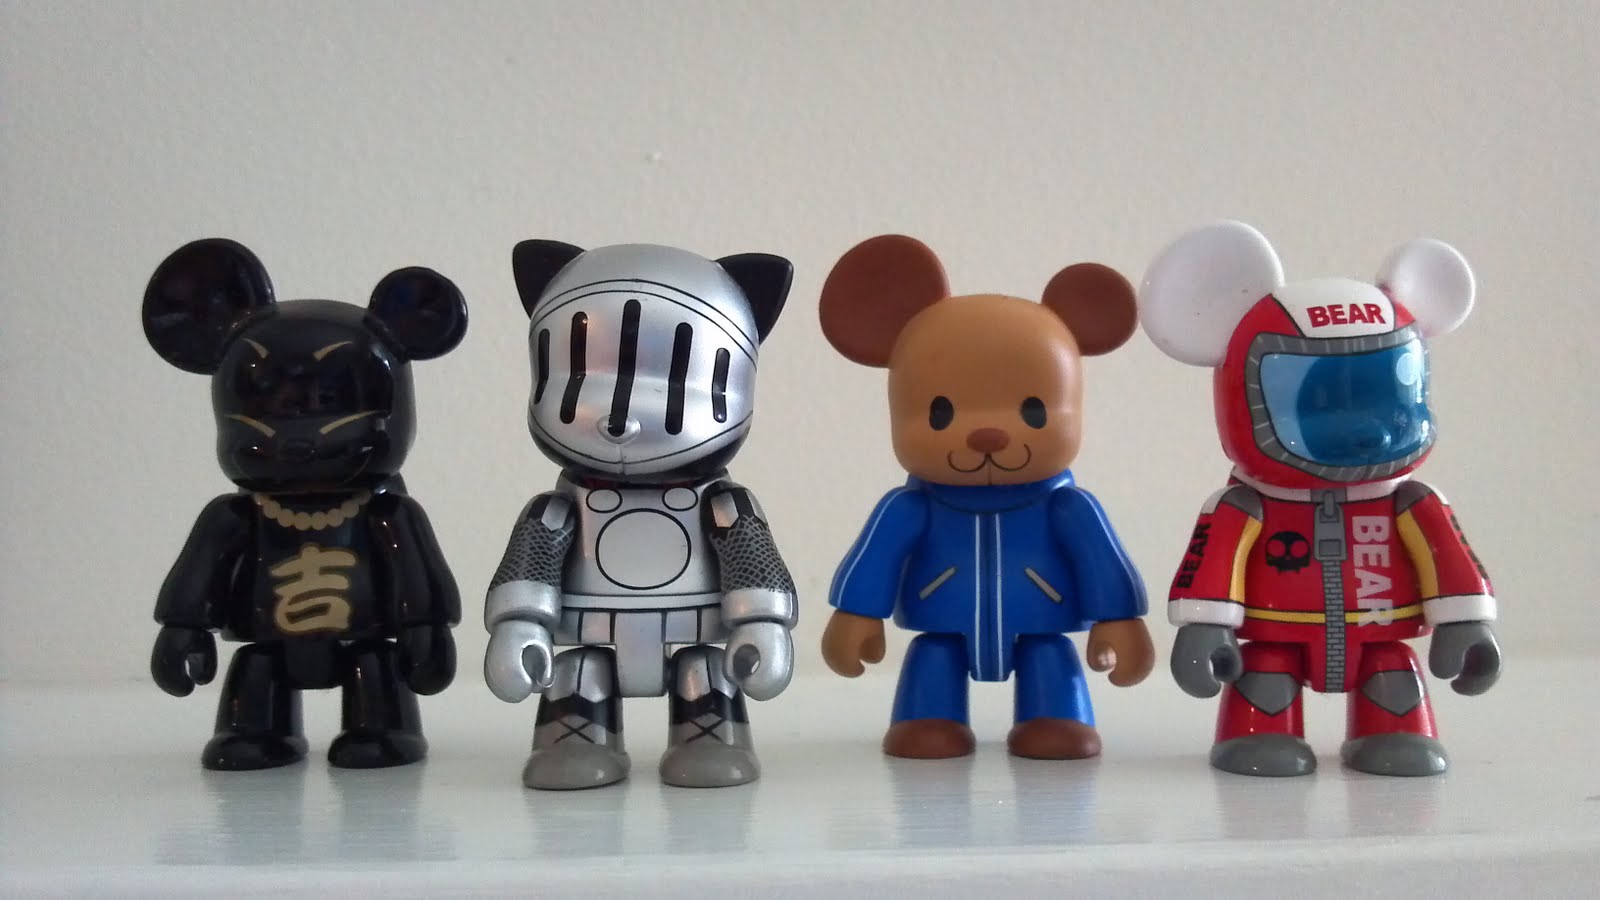 Включи робот мишка. Беар-роботс. Плюшевый мишка робот. Robot Bear игрушка. Плюшевый робот Тедди.